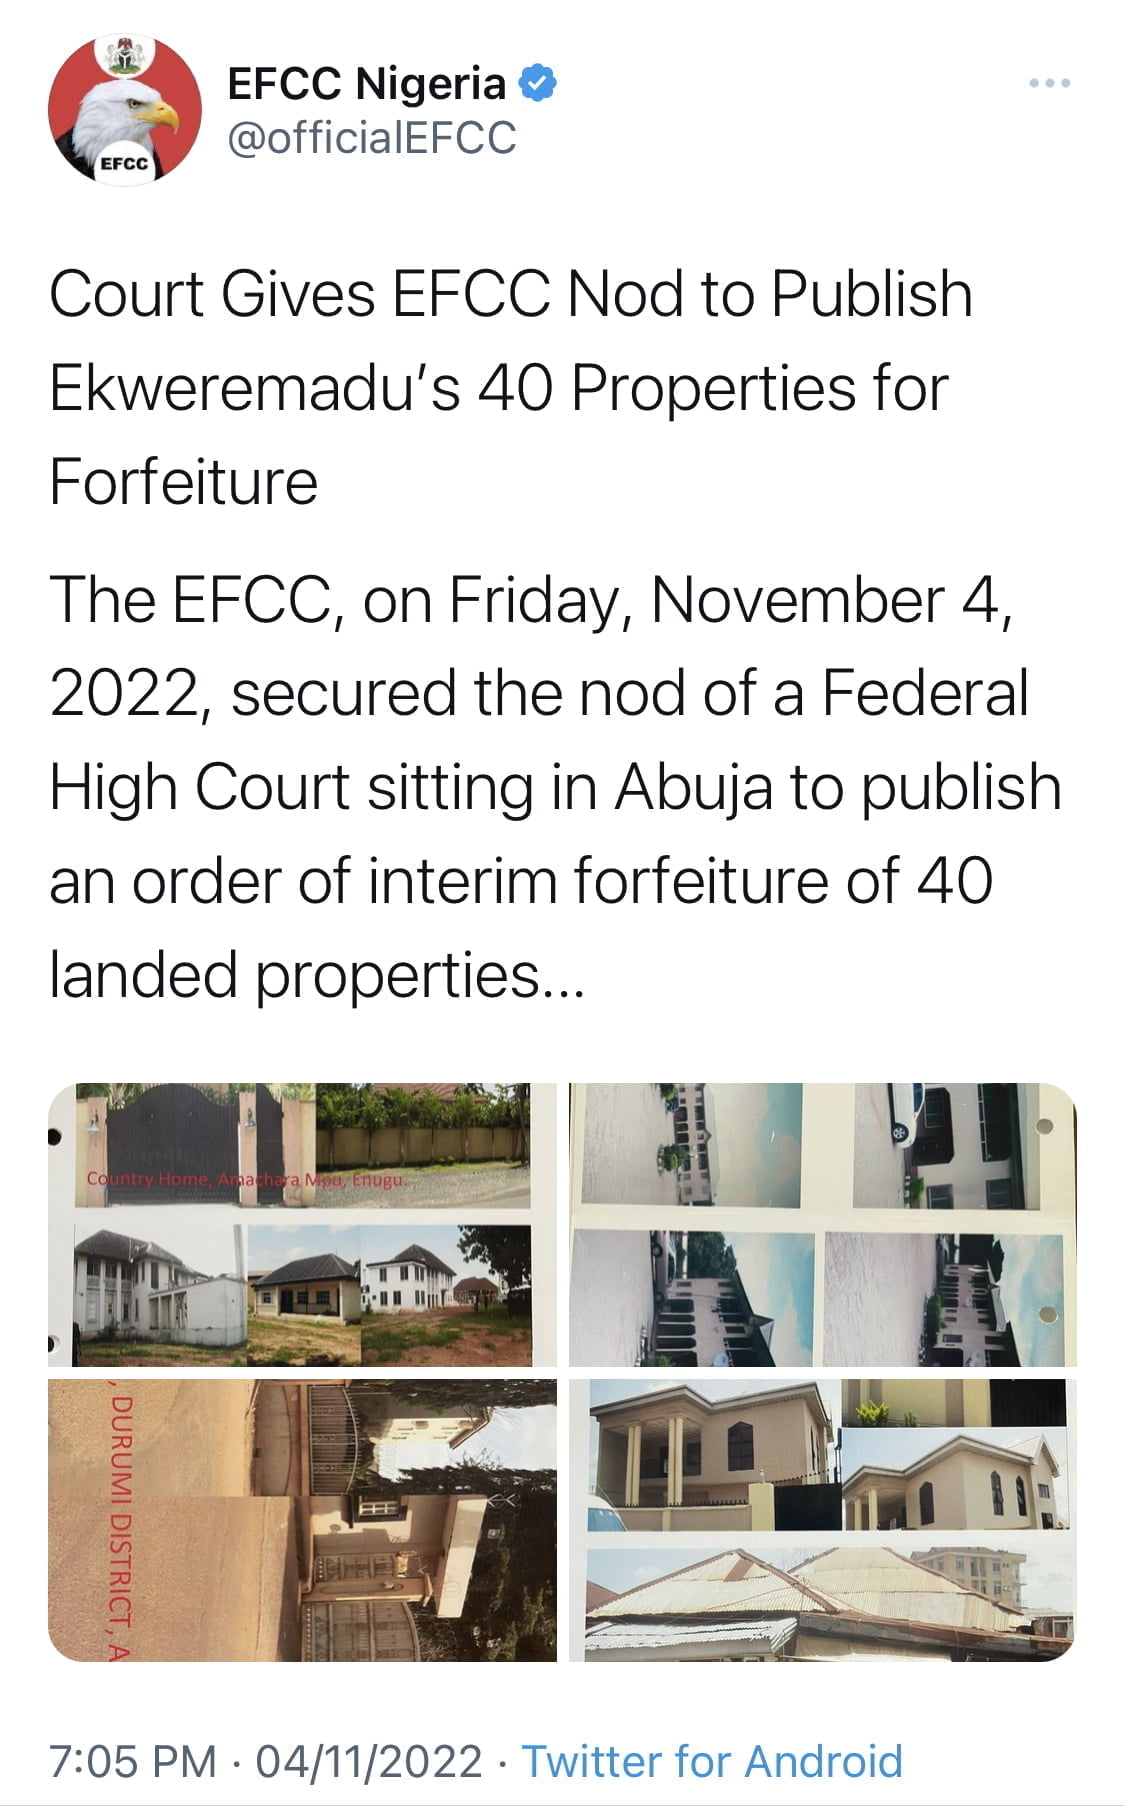 Amidst Organ Harvesting Charges in UK, EFCC Seizes 40 Properties of Ex-Senate President Ekweremadu [photos]